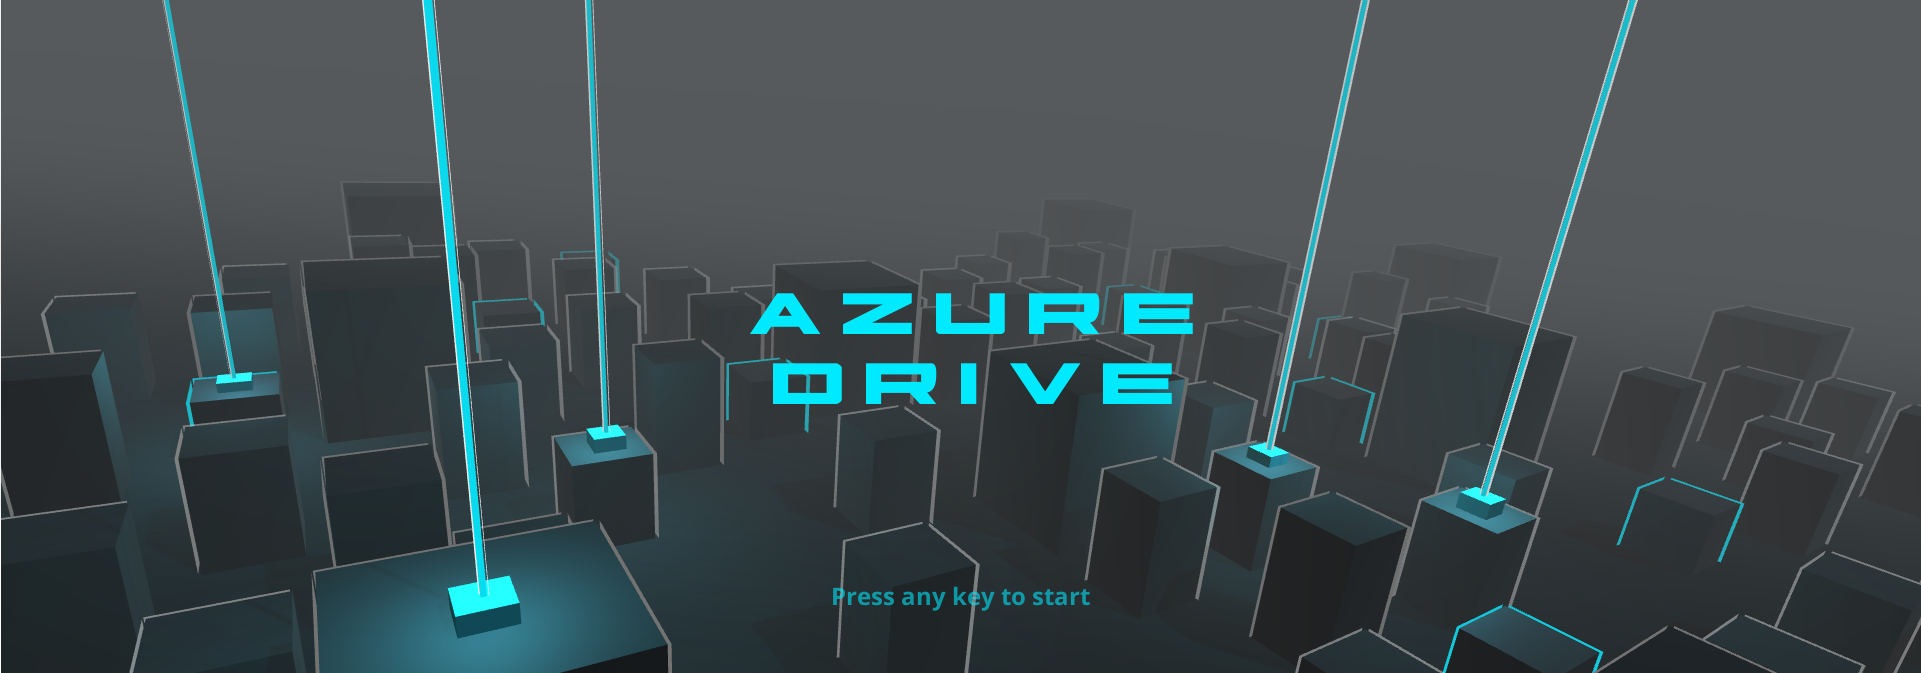 Azure Drive